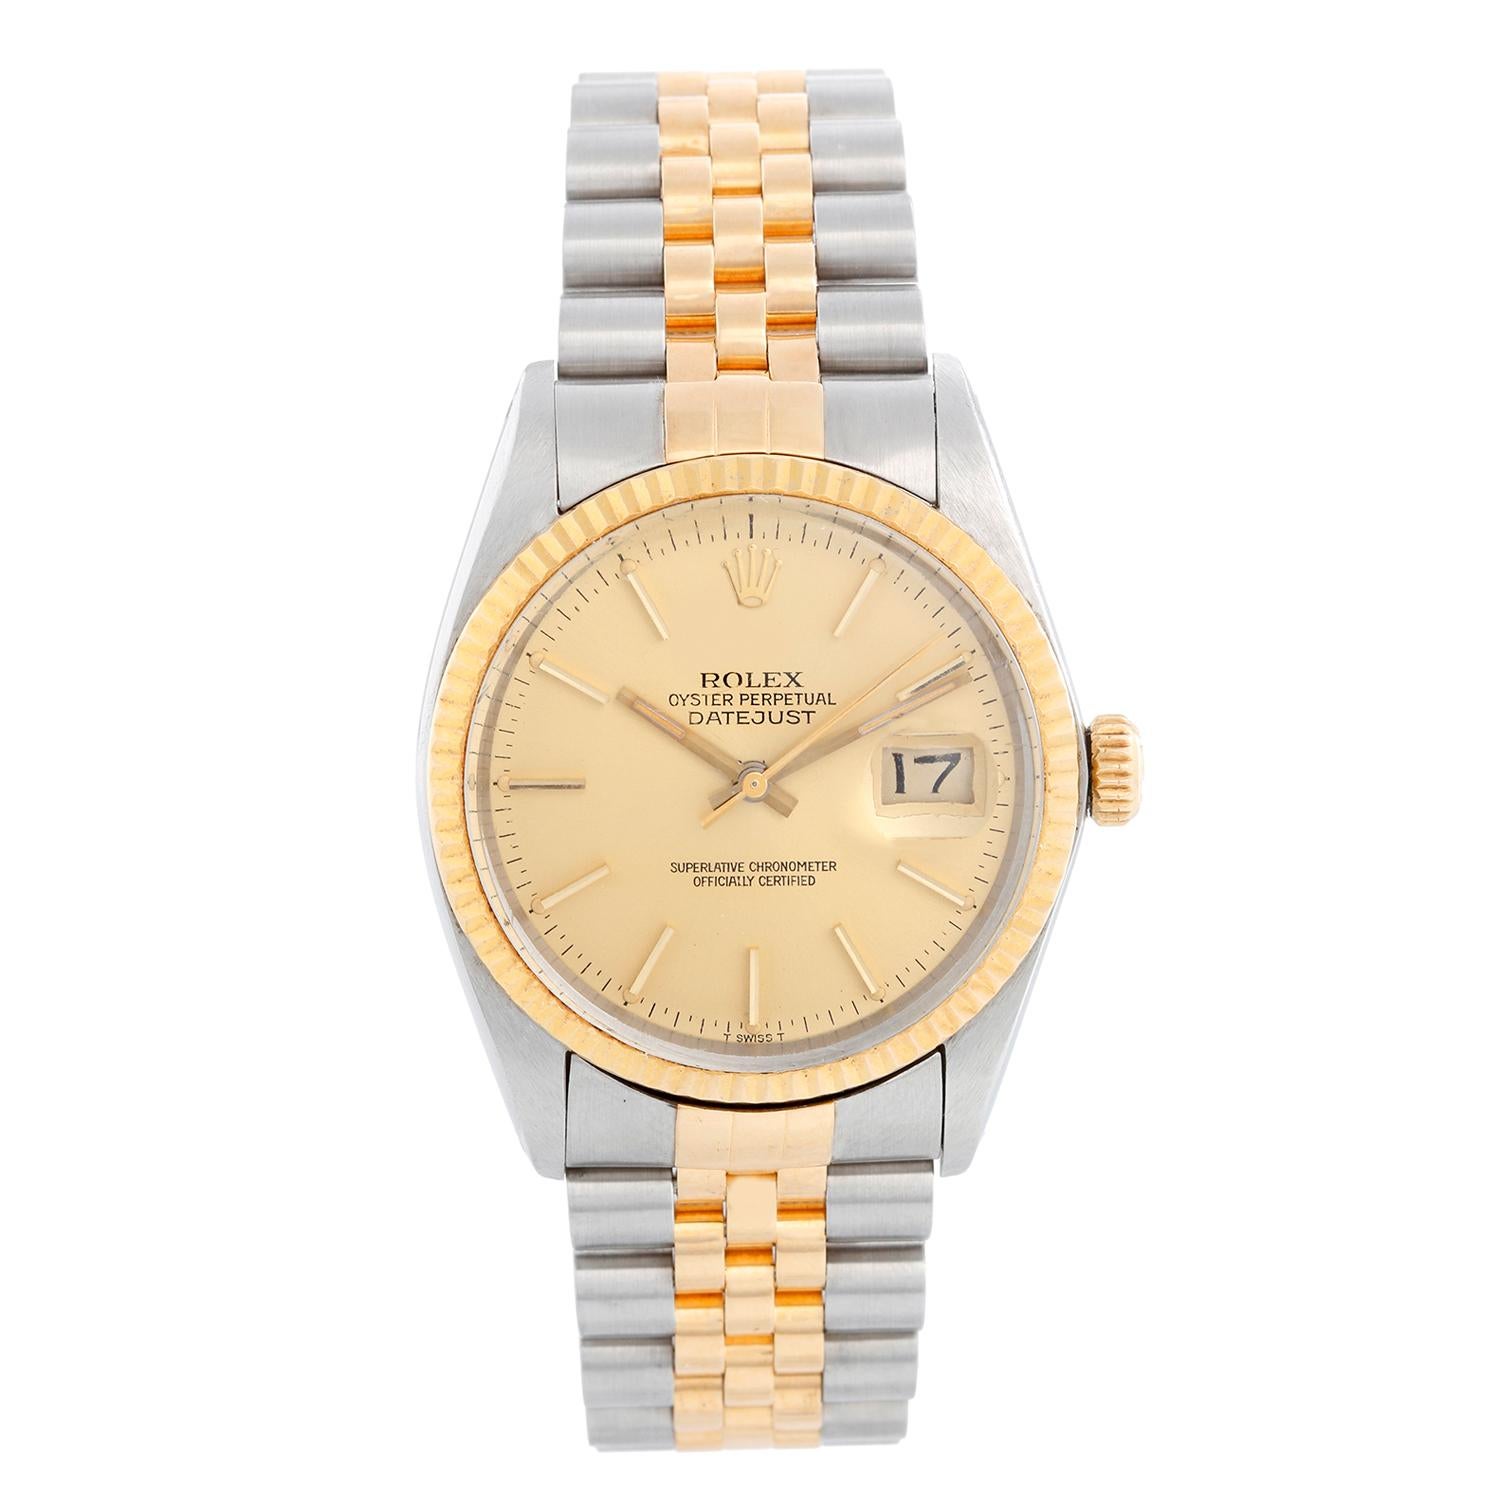 Men's Rolex Datejust 2-Tone Watch 16013